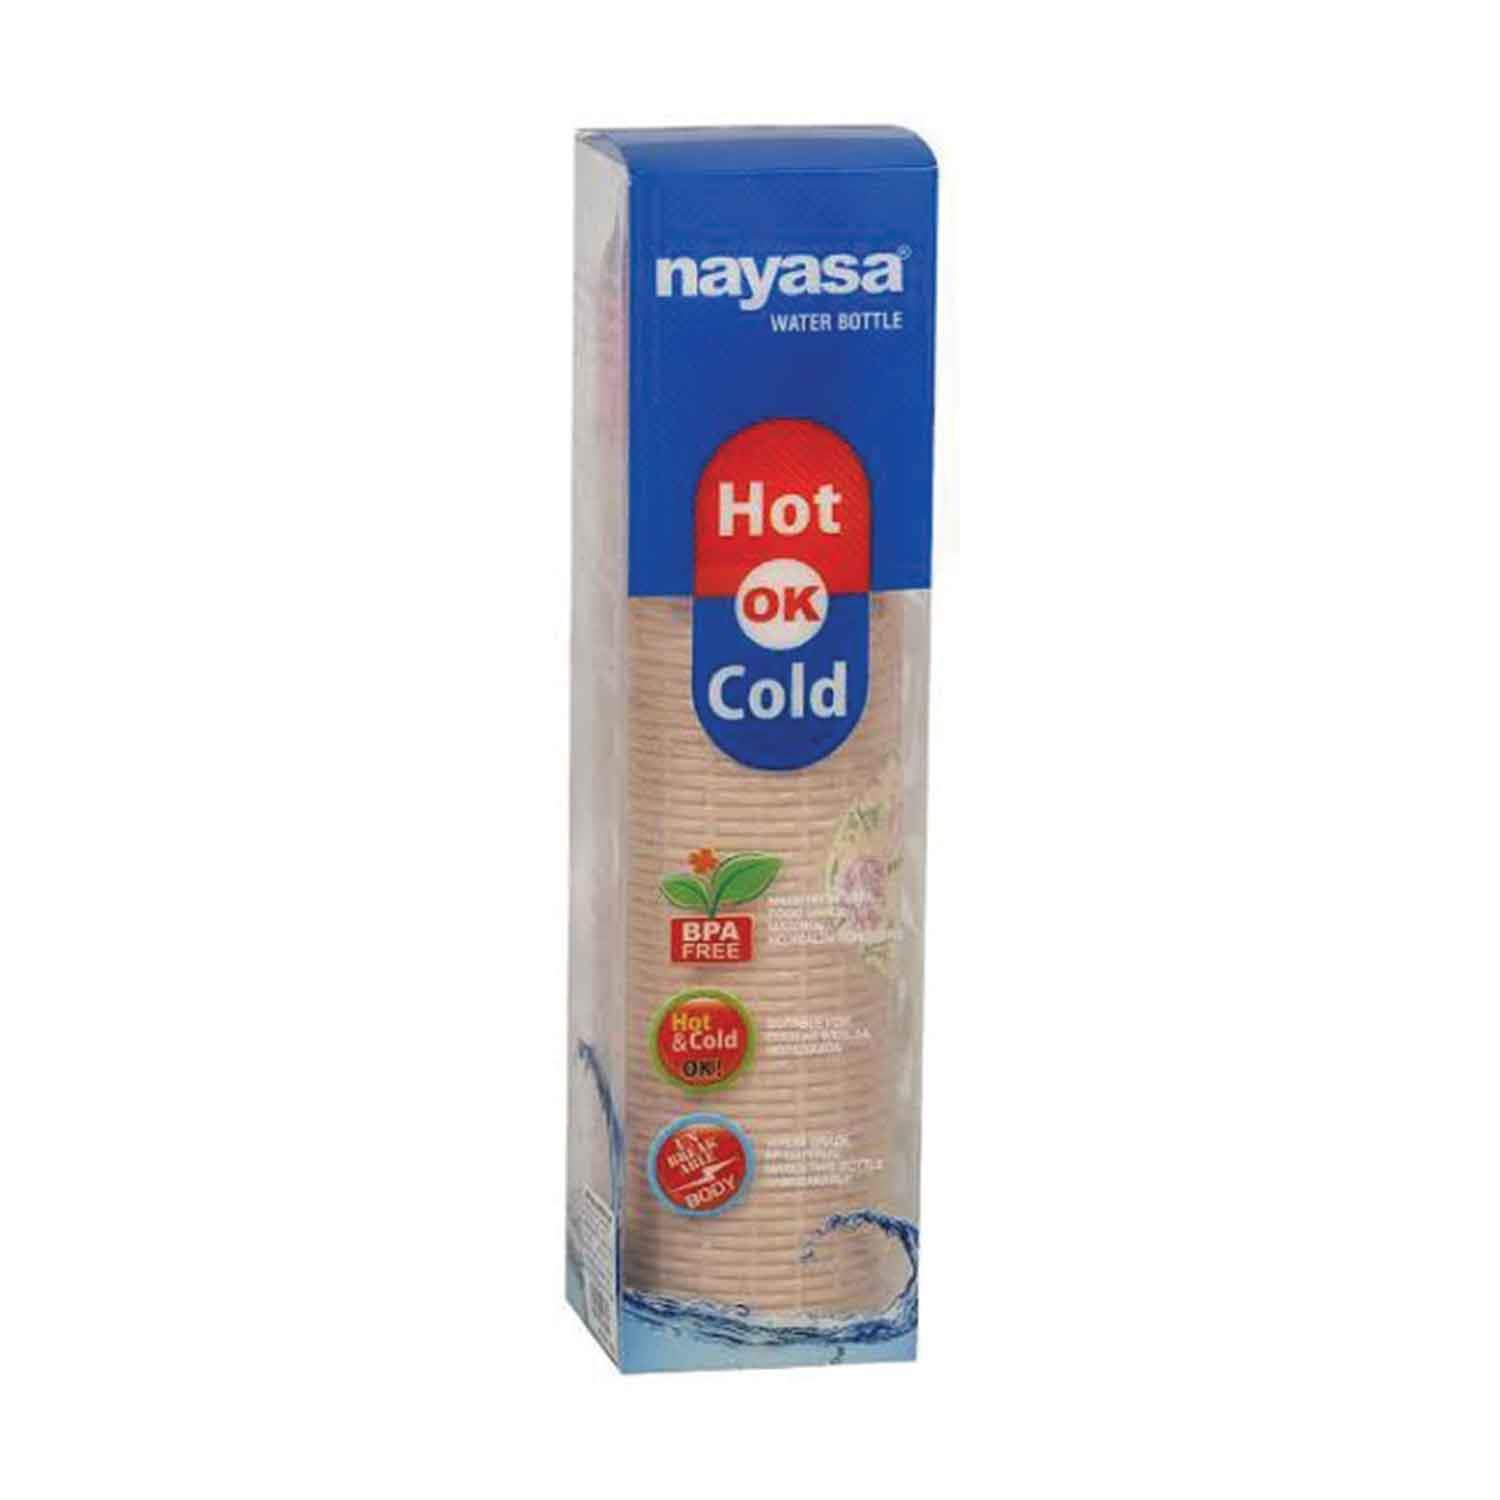 NAYASA WATER BOTTLE HOT OK COLD-1000ML